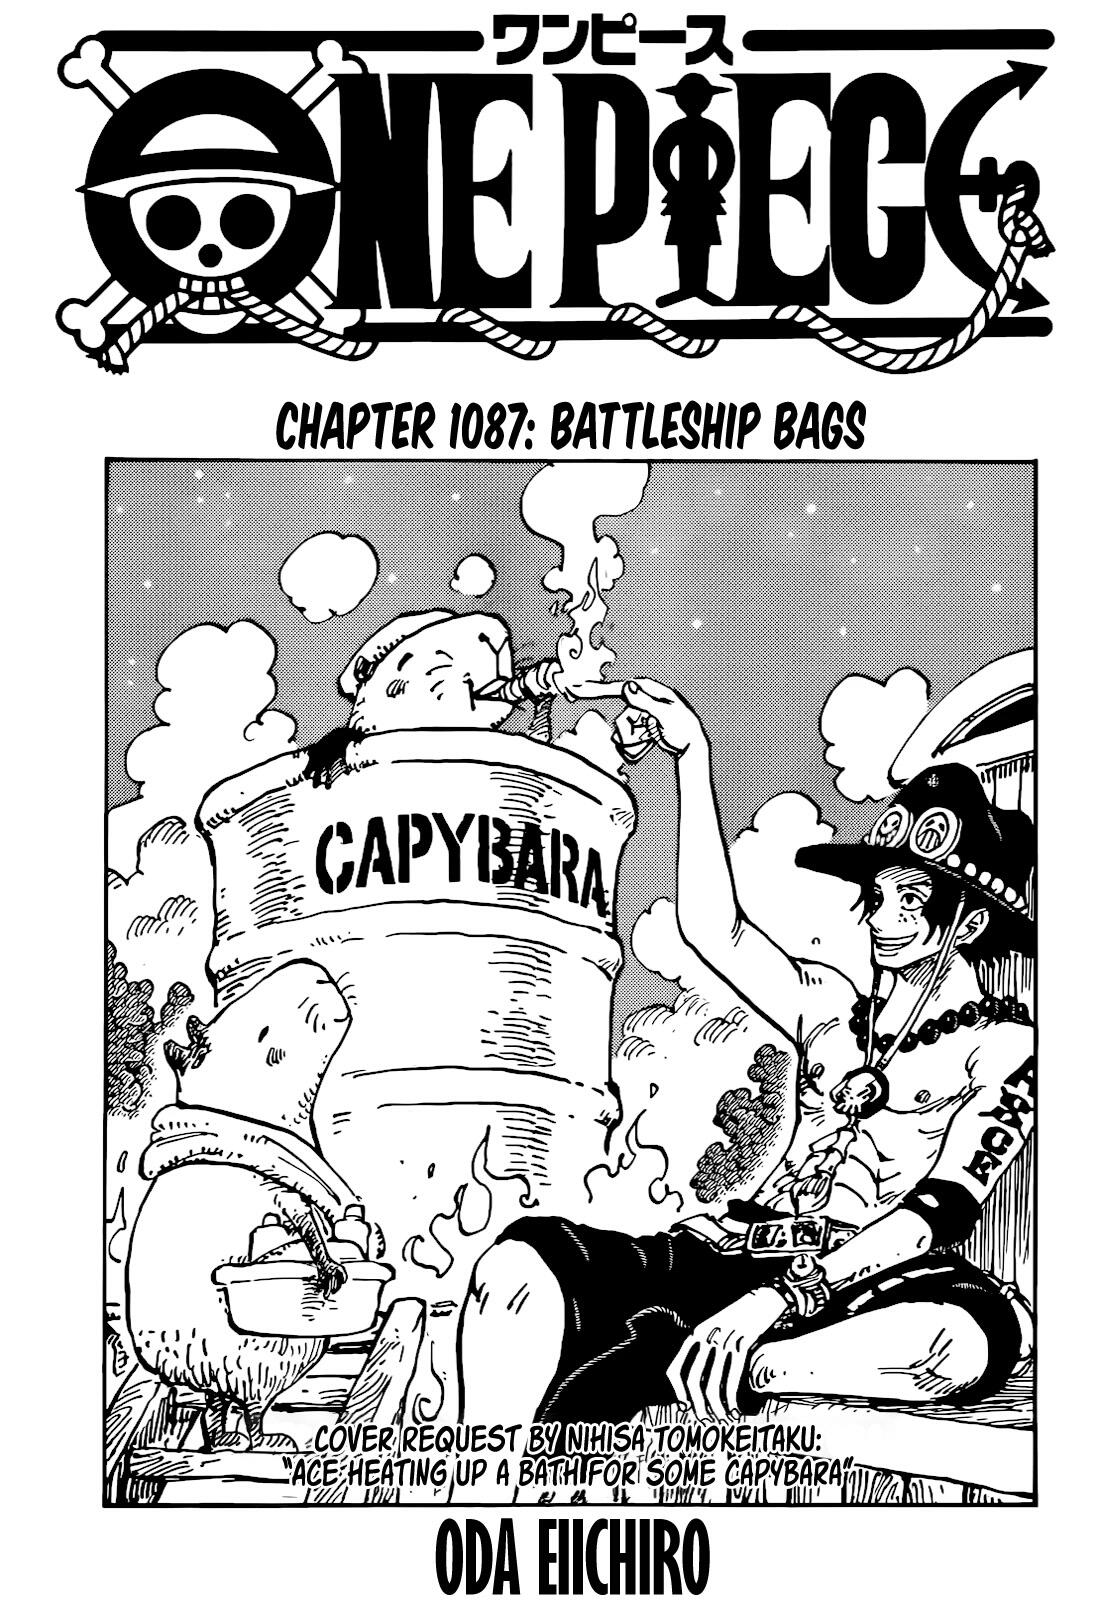 Read One Piece Chapter 1087: Battleship Bags On Mangakakalot